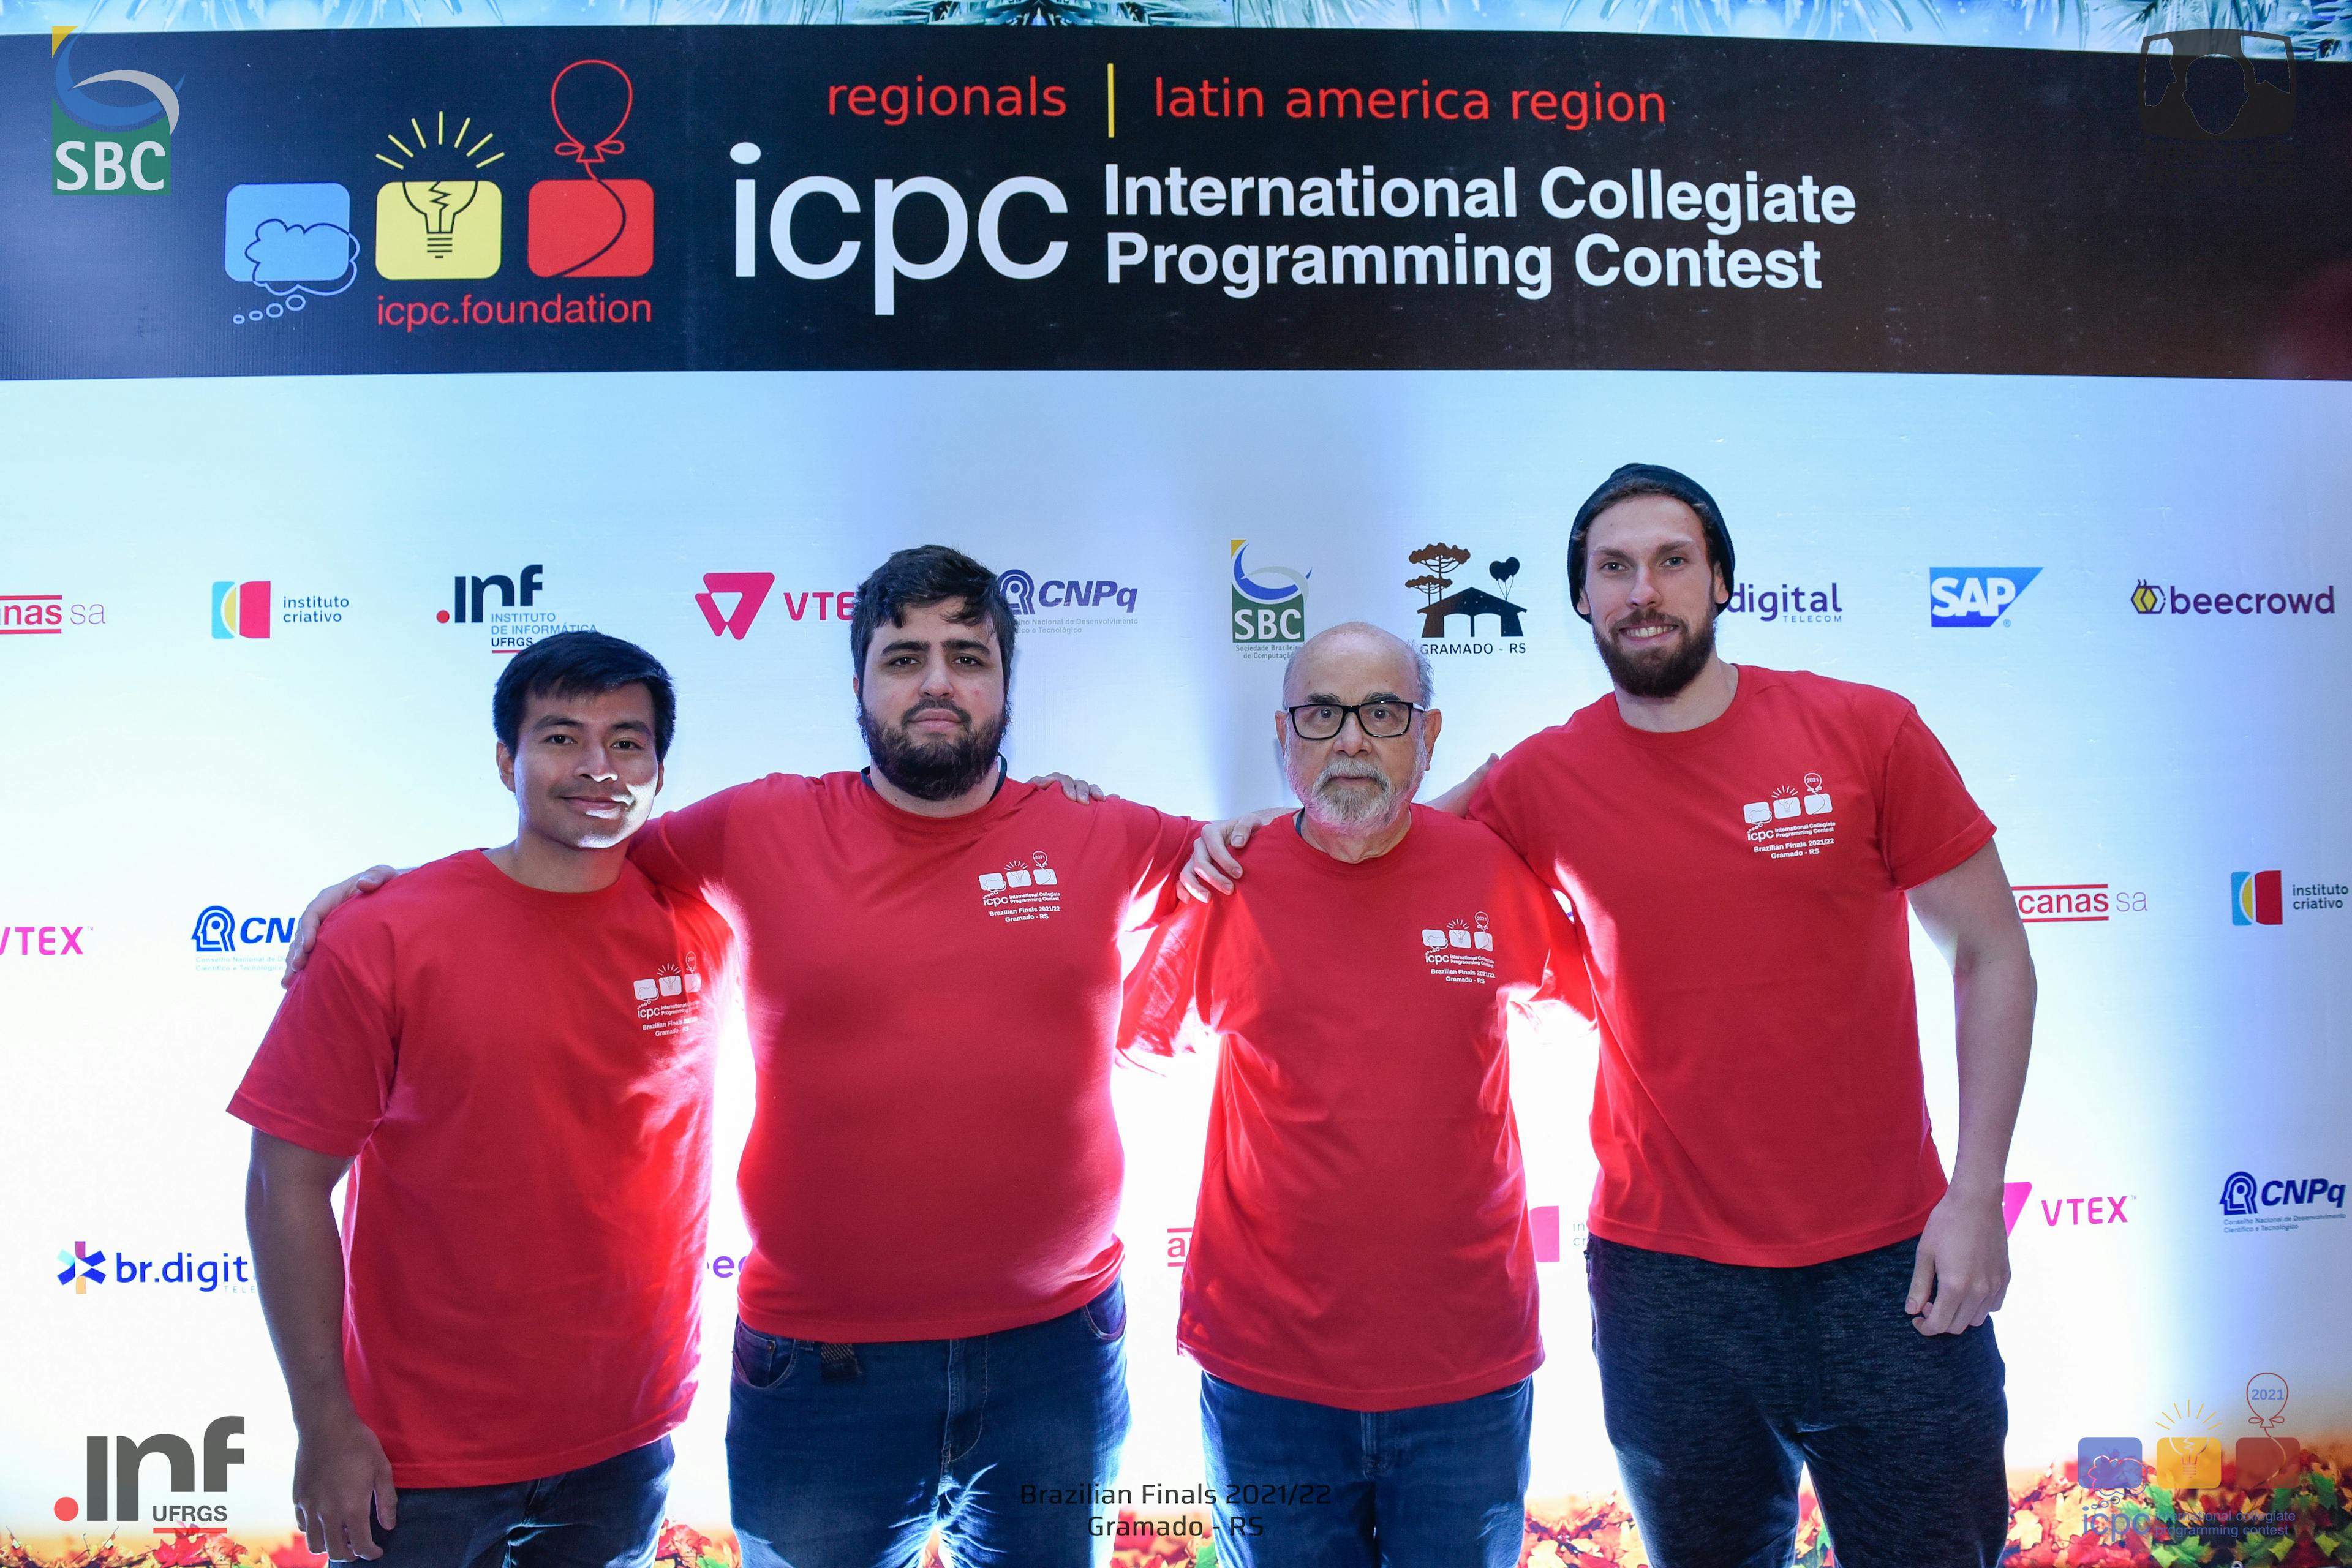 ICPC South America/Brazil Final UERJ Team